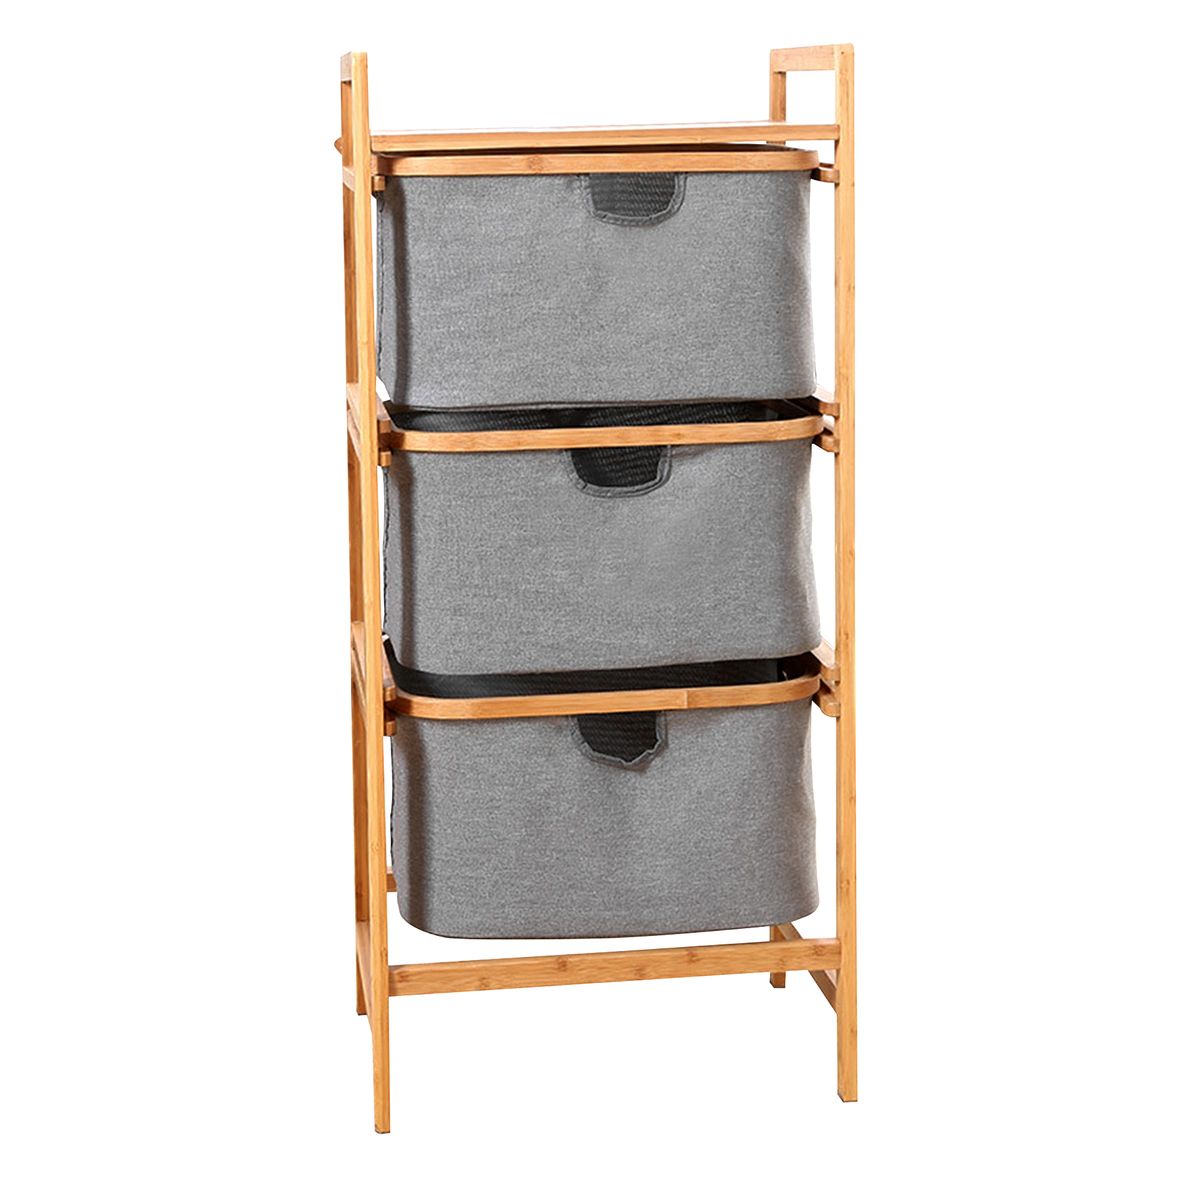 Heartdeco Bamboo Dresser Storage Unit with Sliding Drawers | Shop Today ...